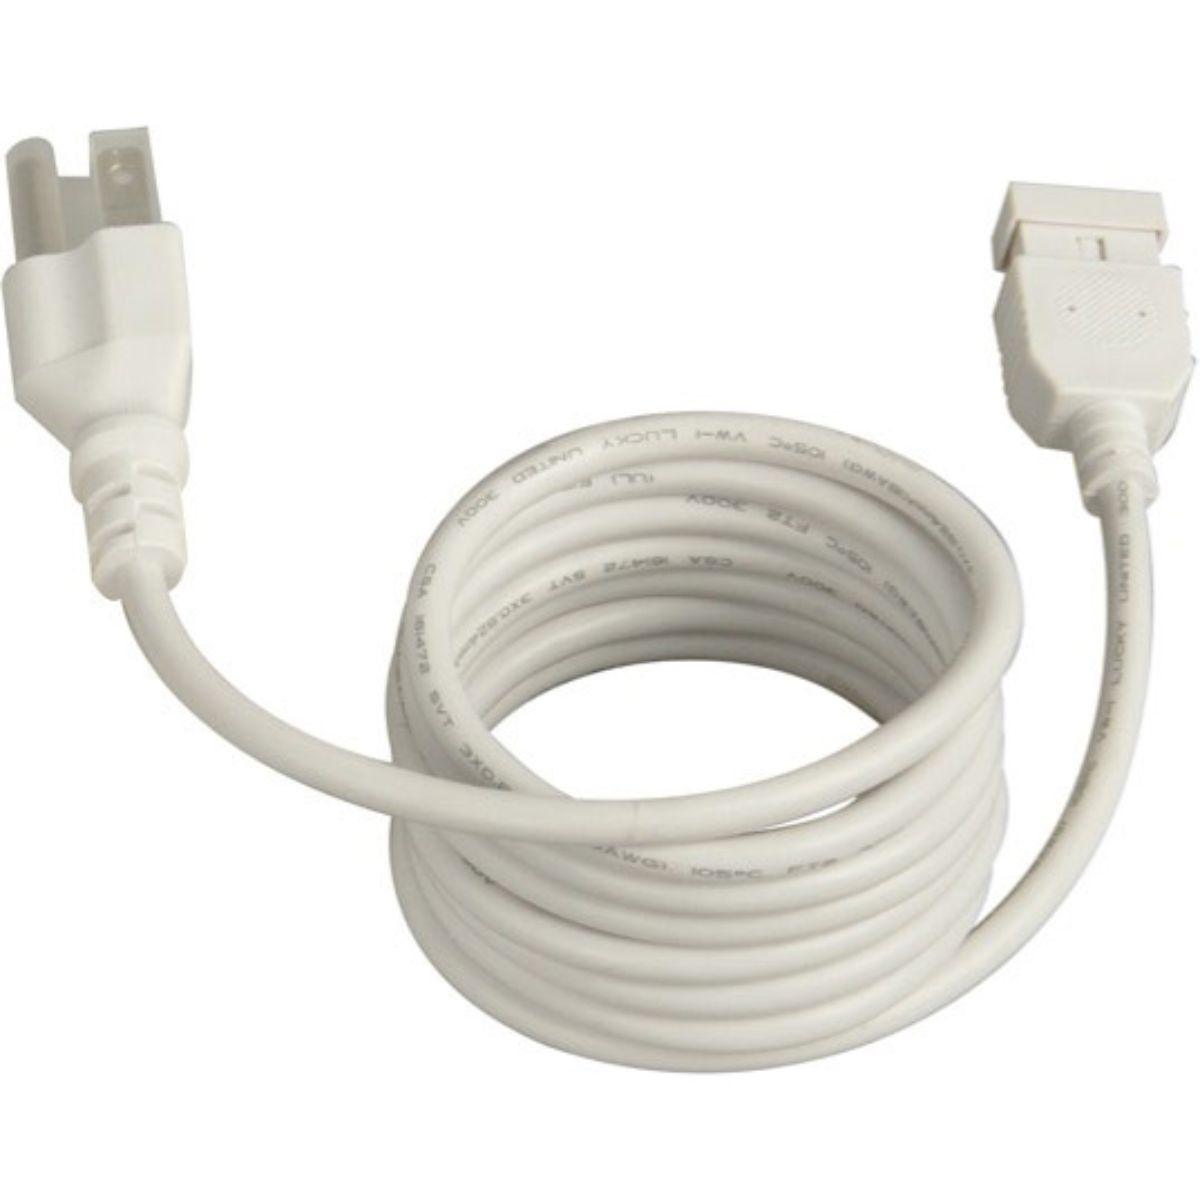 CounterMax 72in. Power Cord, White